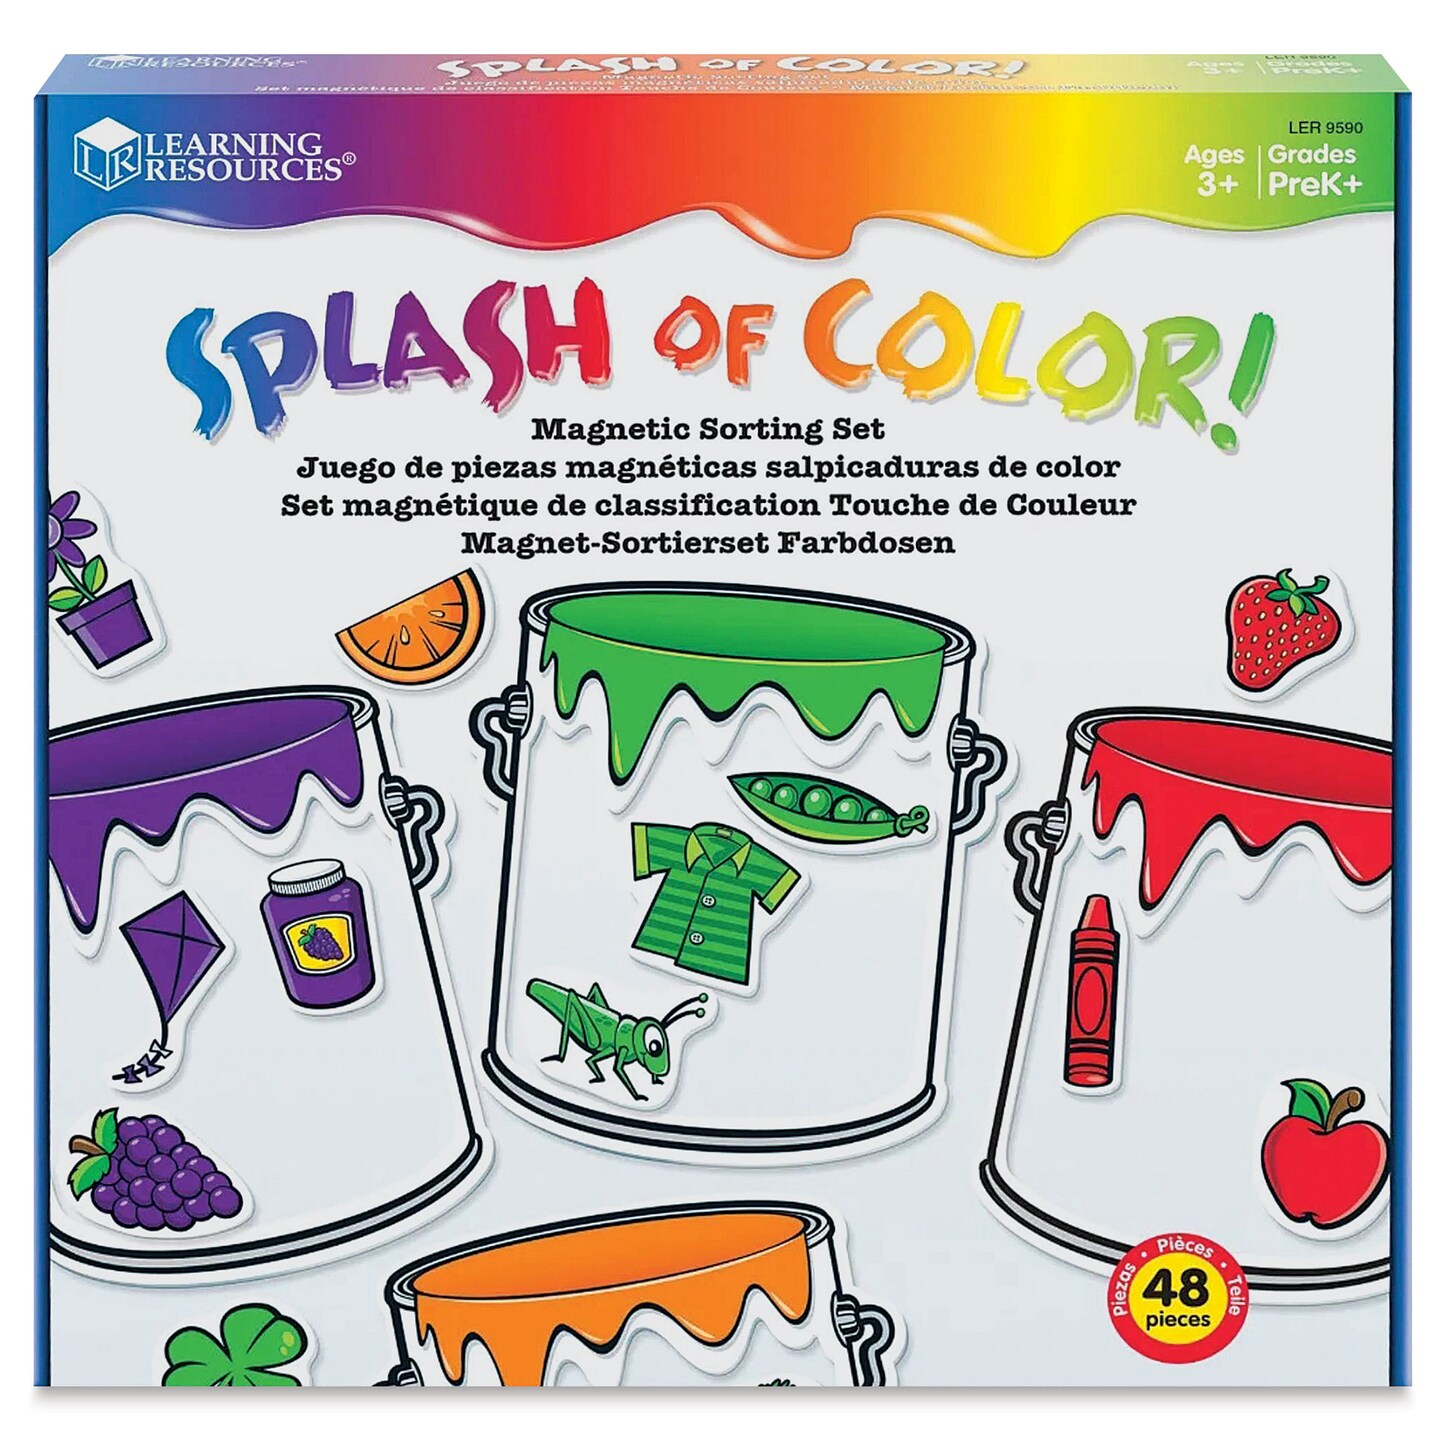 Learning Resources Splash of Color Magnetic Sorting Set